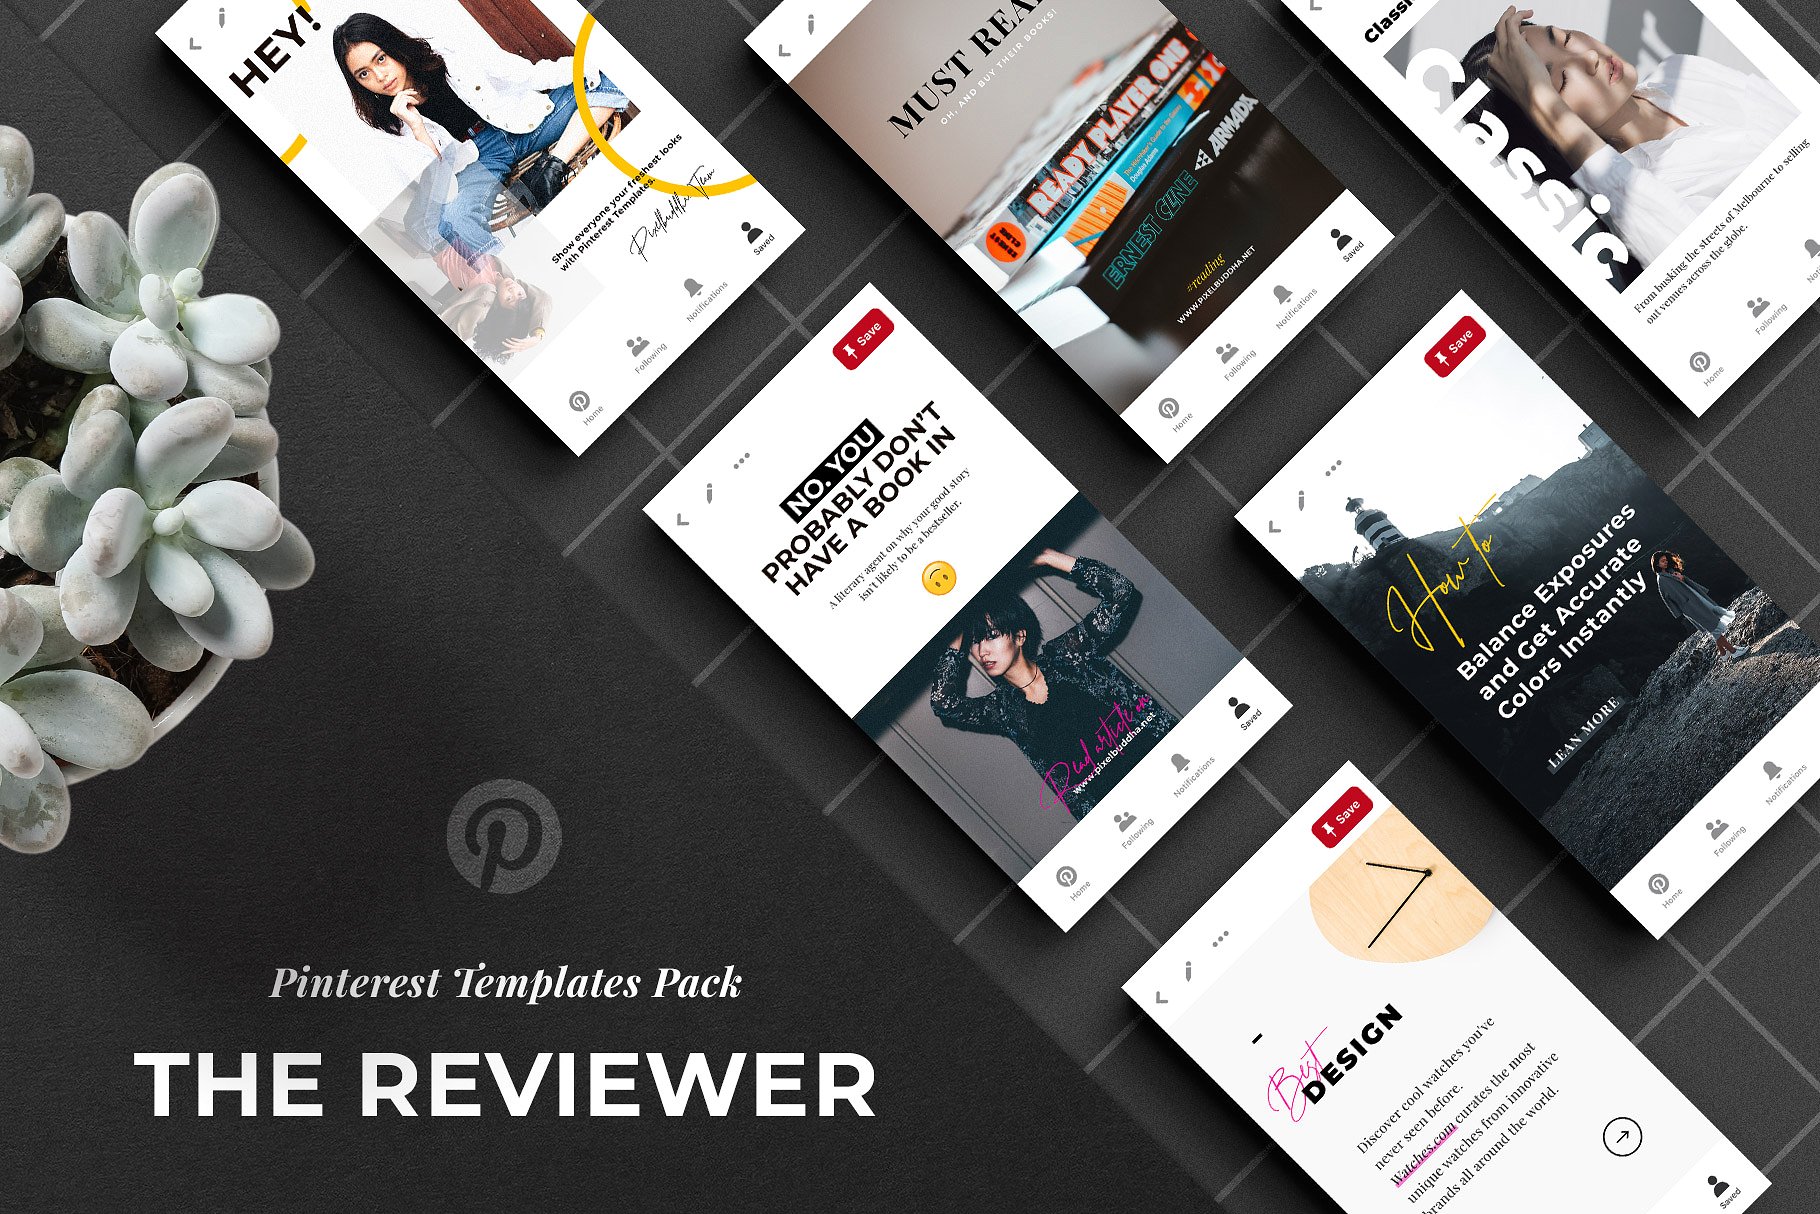 Pinterest品牌营销贴图PSD模板16图库精选 The Reviewer Pinterest Templates Set插图